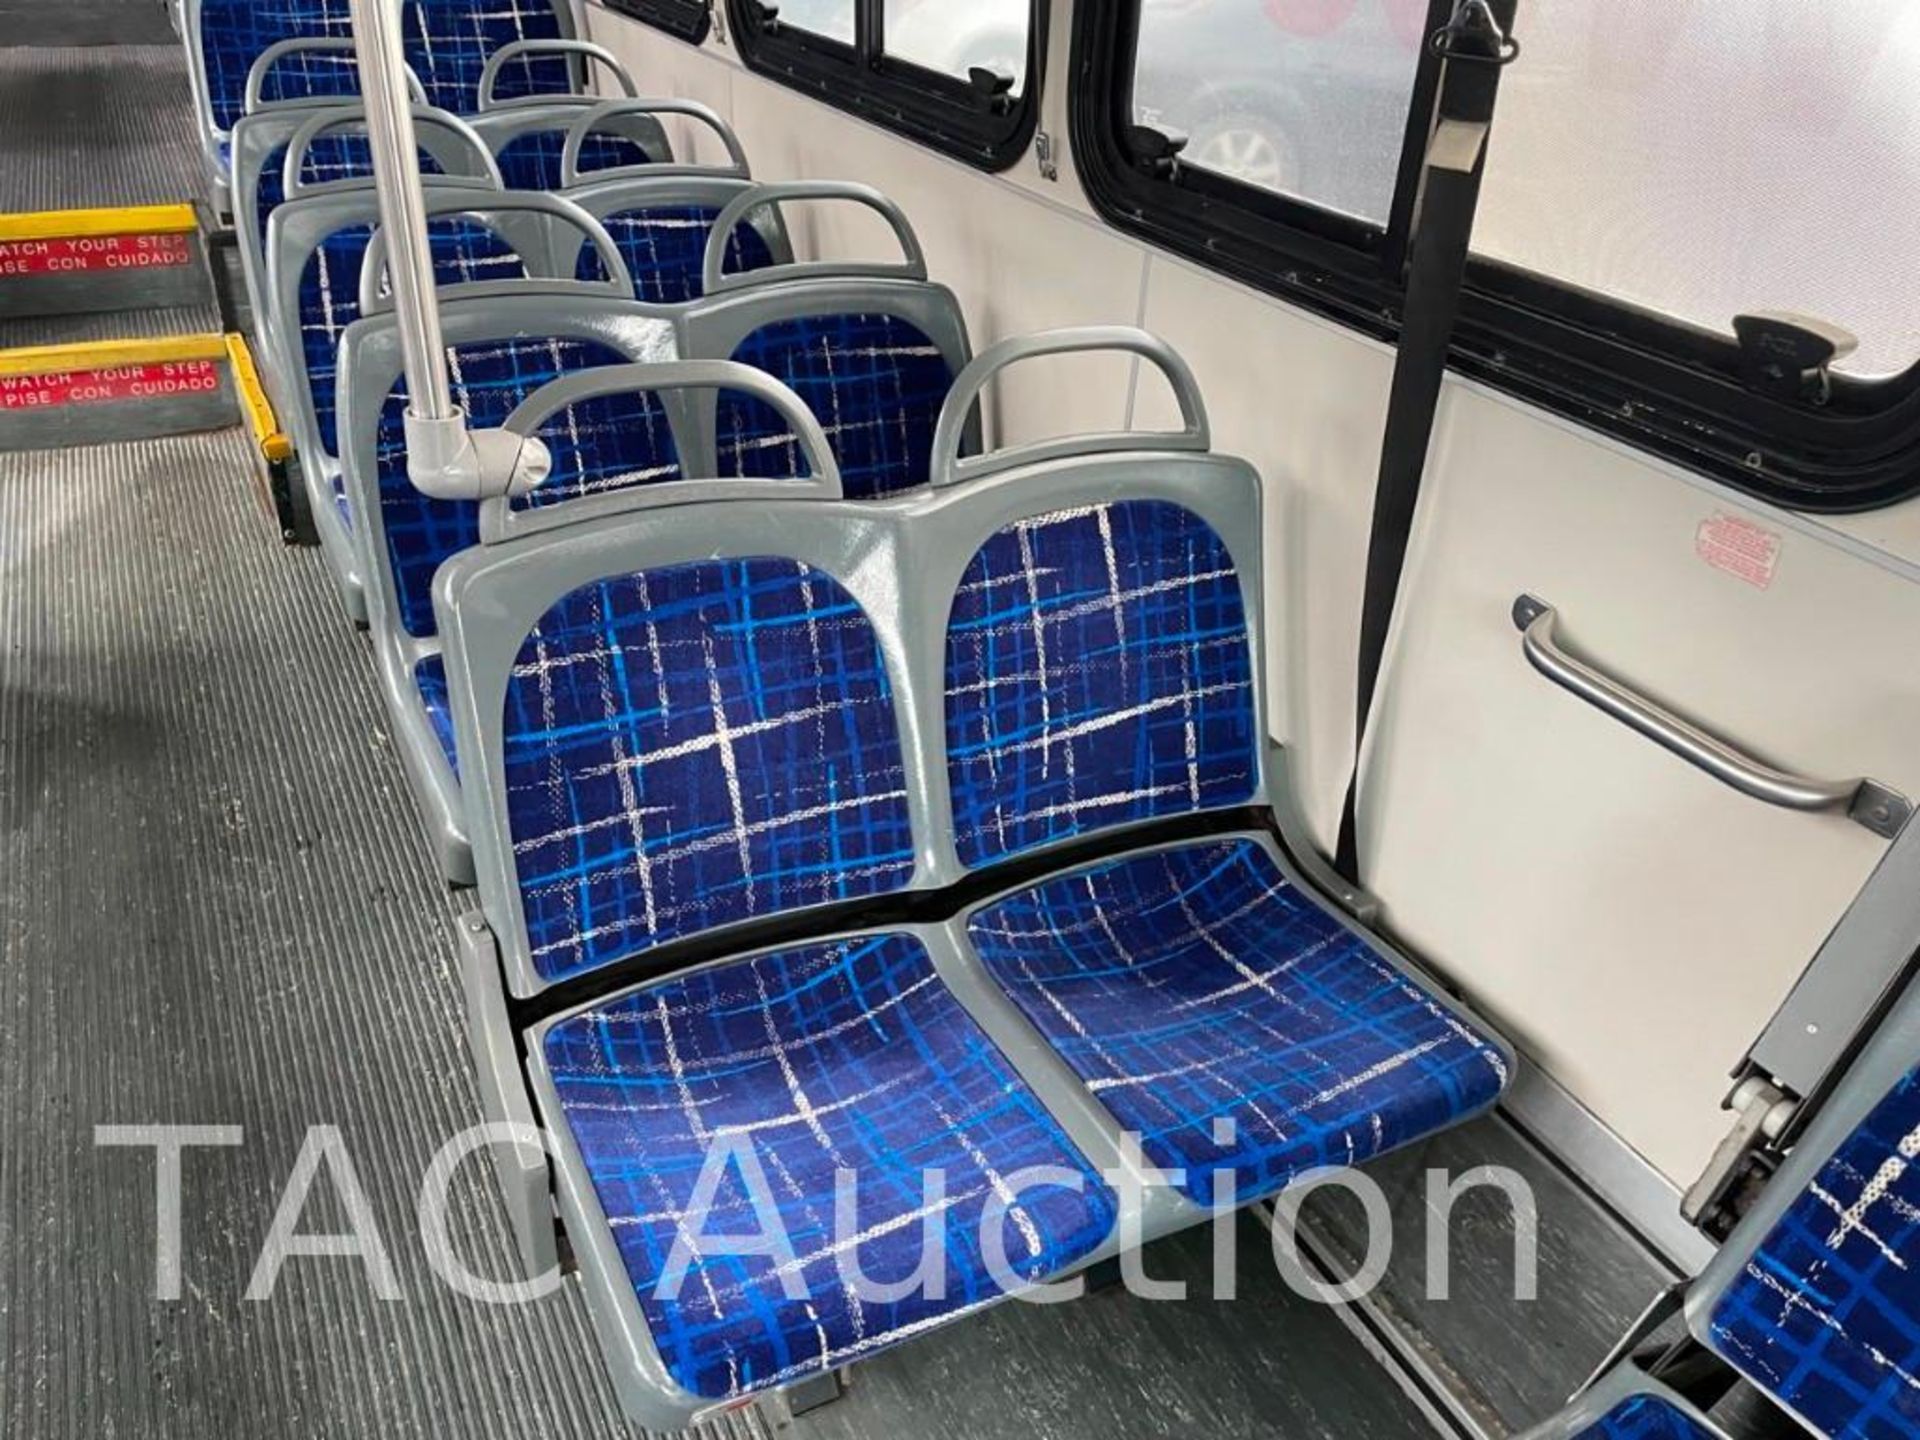 2005 Gillig Low Floor (40) Passenger Coach Transit Bus - Image 45 of 91